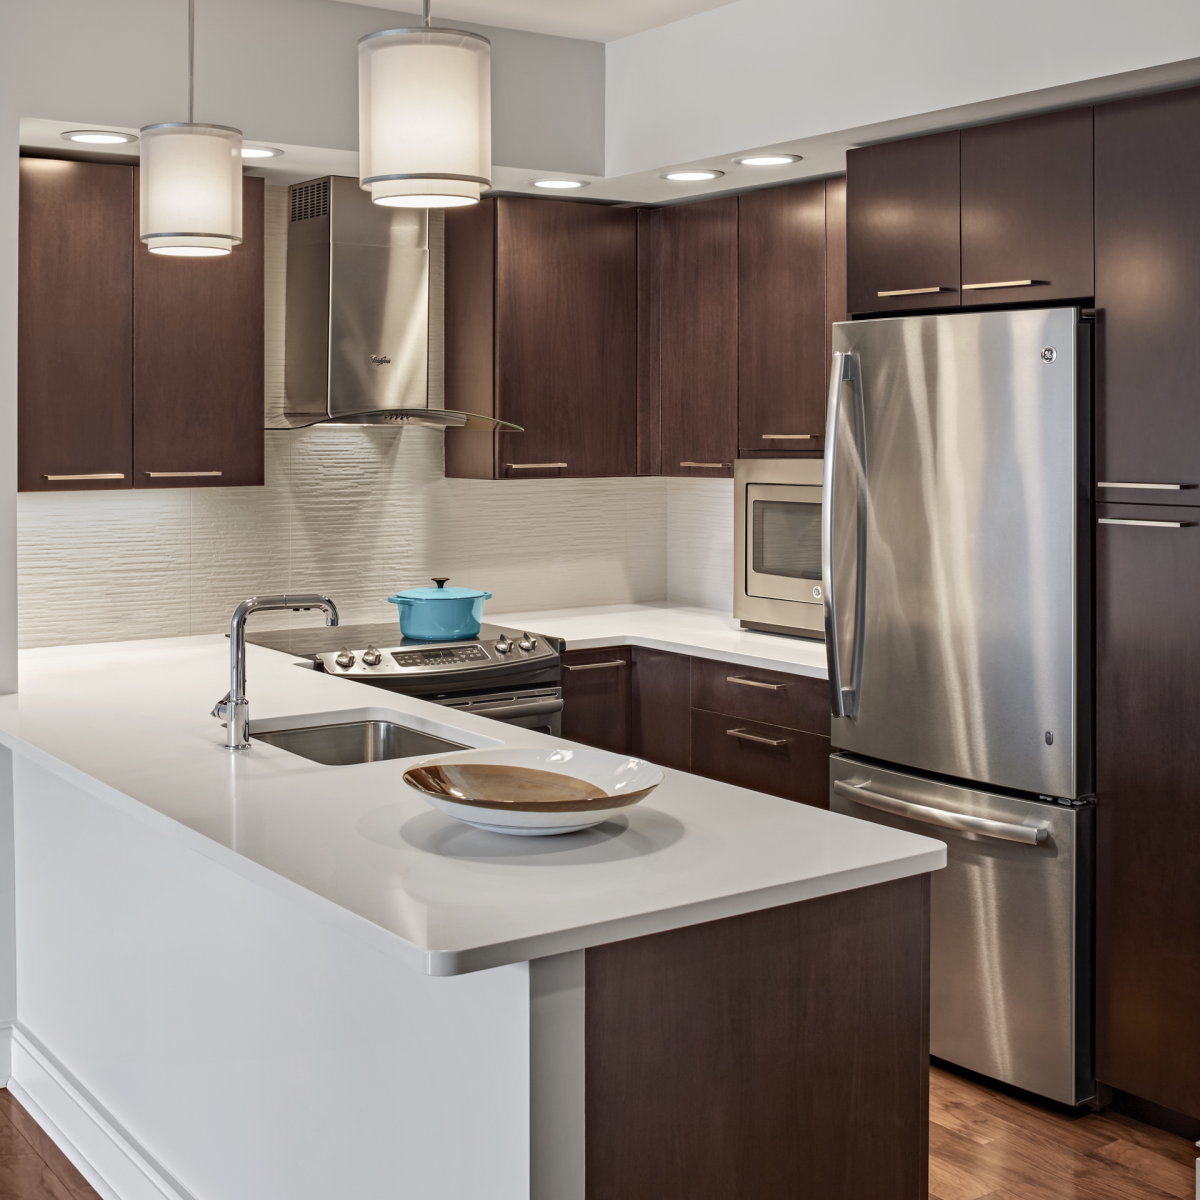 Modern kitchen design in apartment at senior independent living community